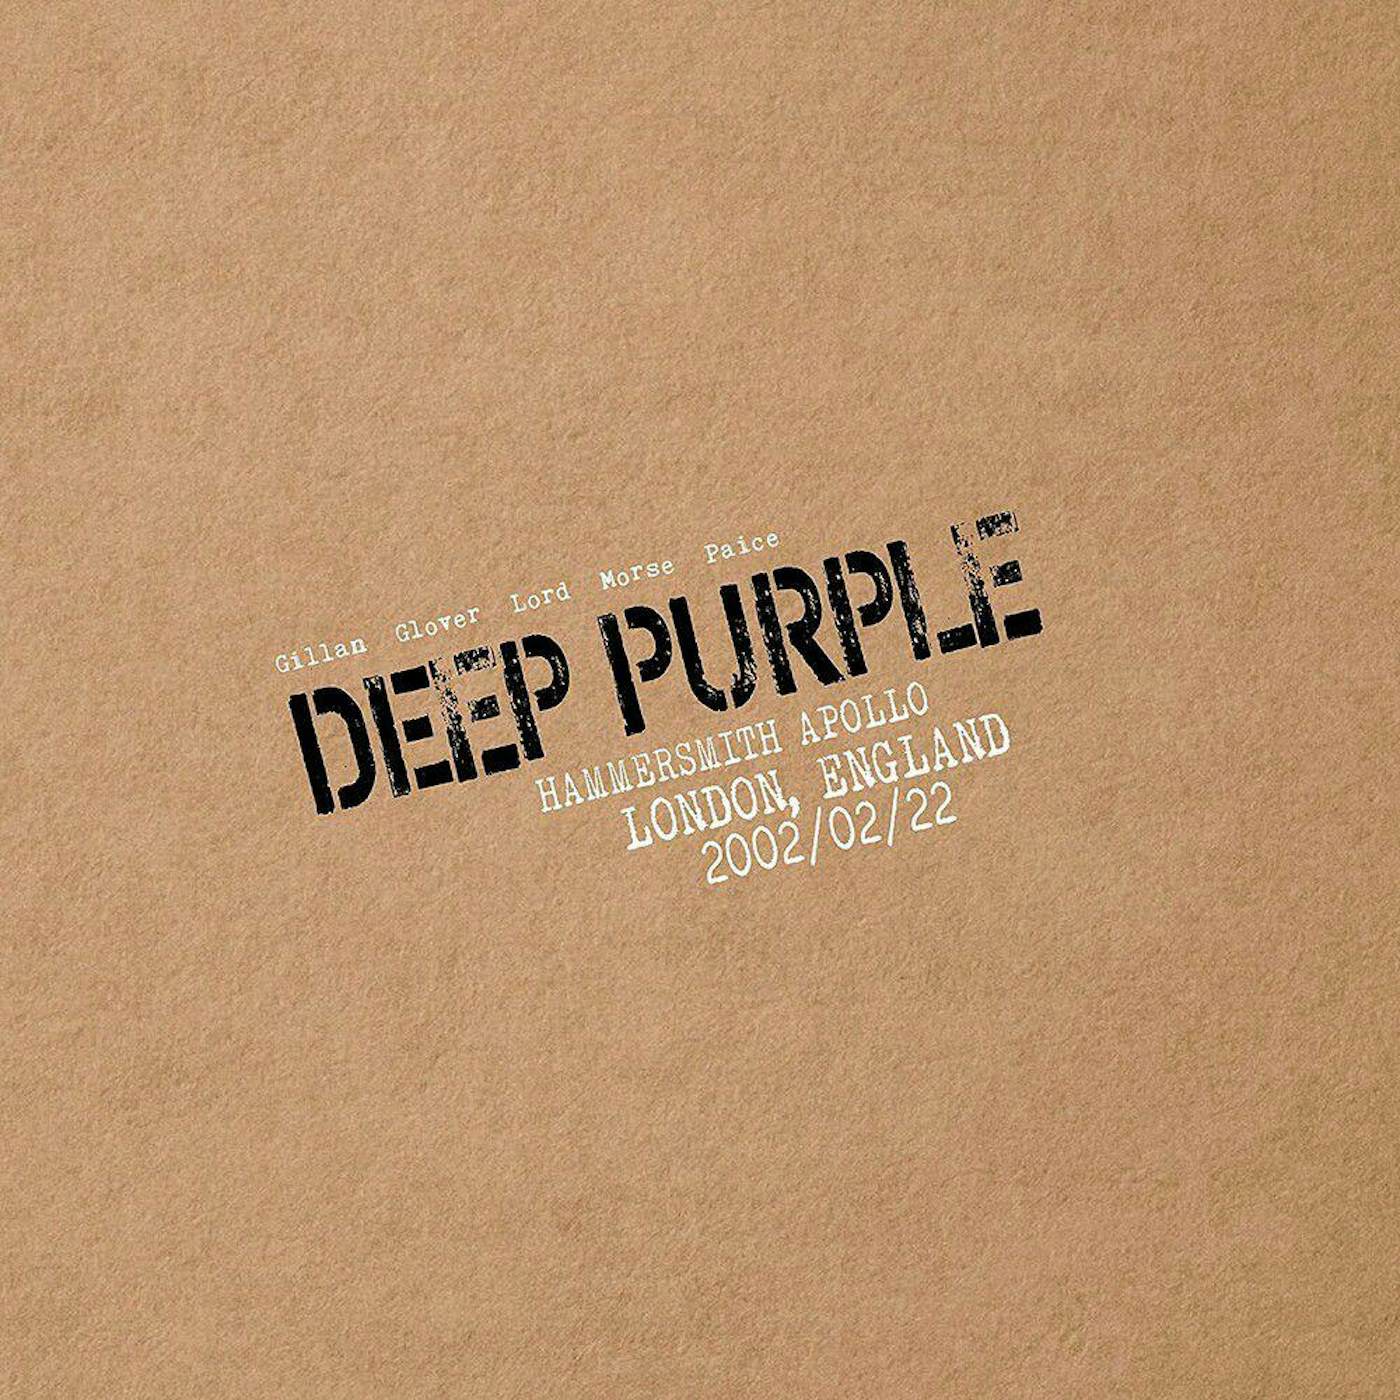 Deep Purple Live in London 2002 Vinyl Record